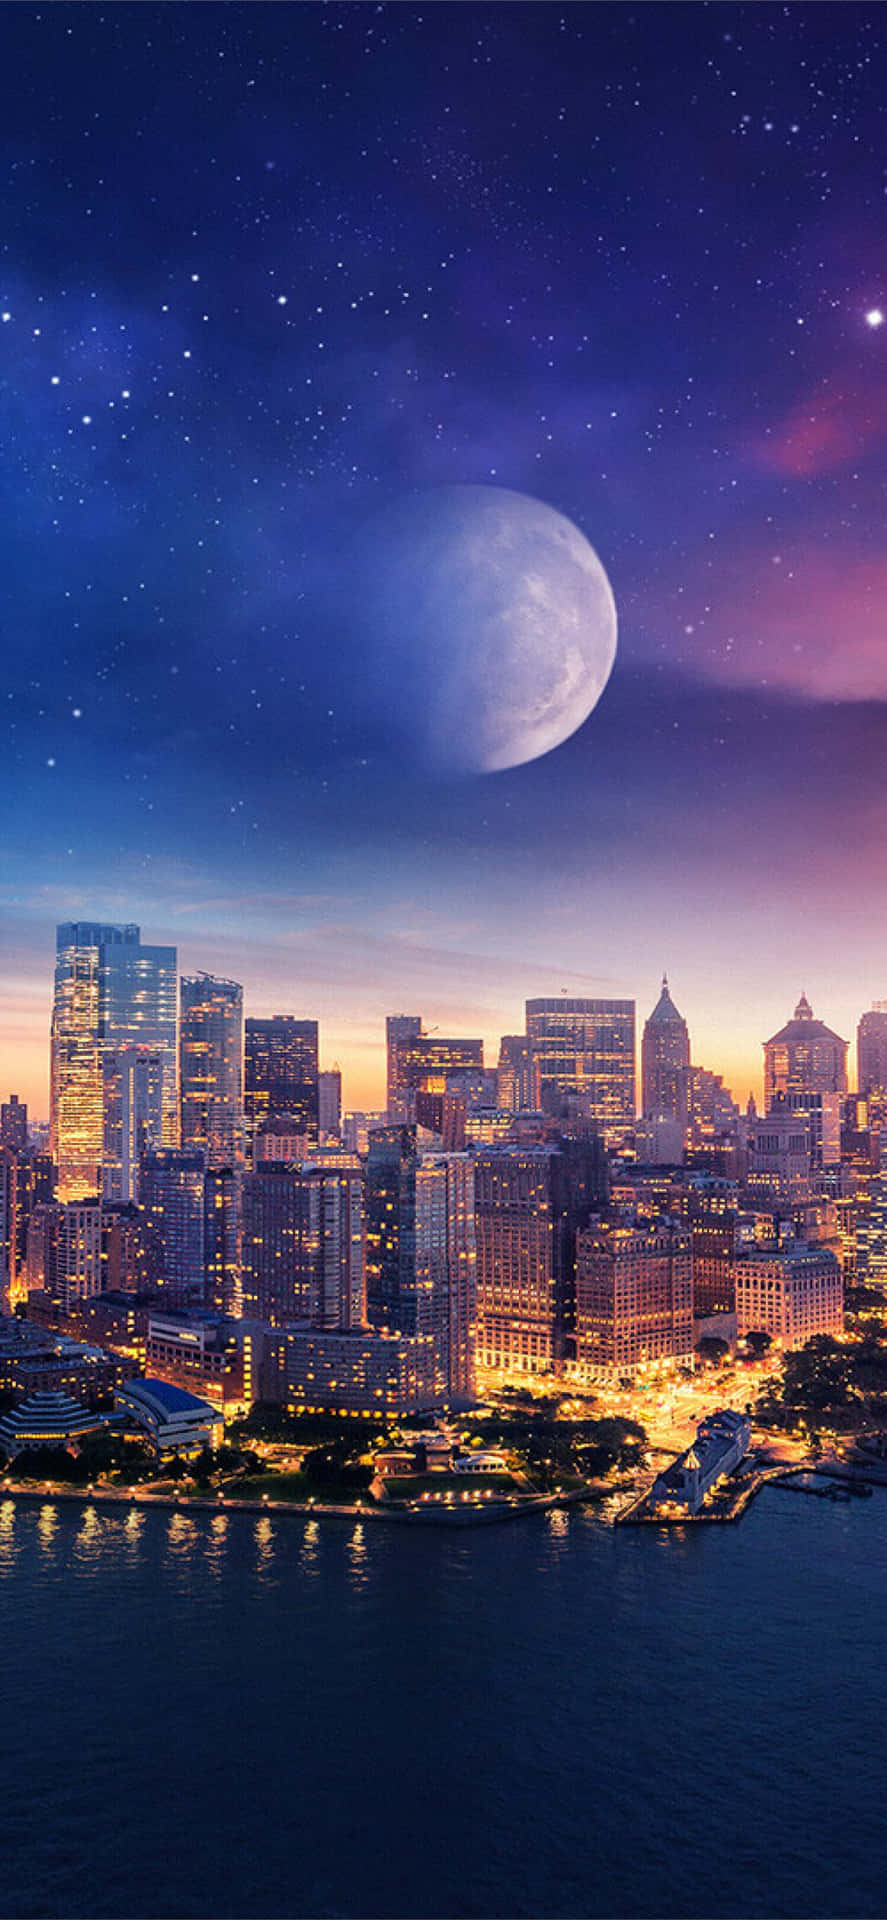 Enjoy an Evenings View of the Lights of the New York City Skyline Wallpaper